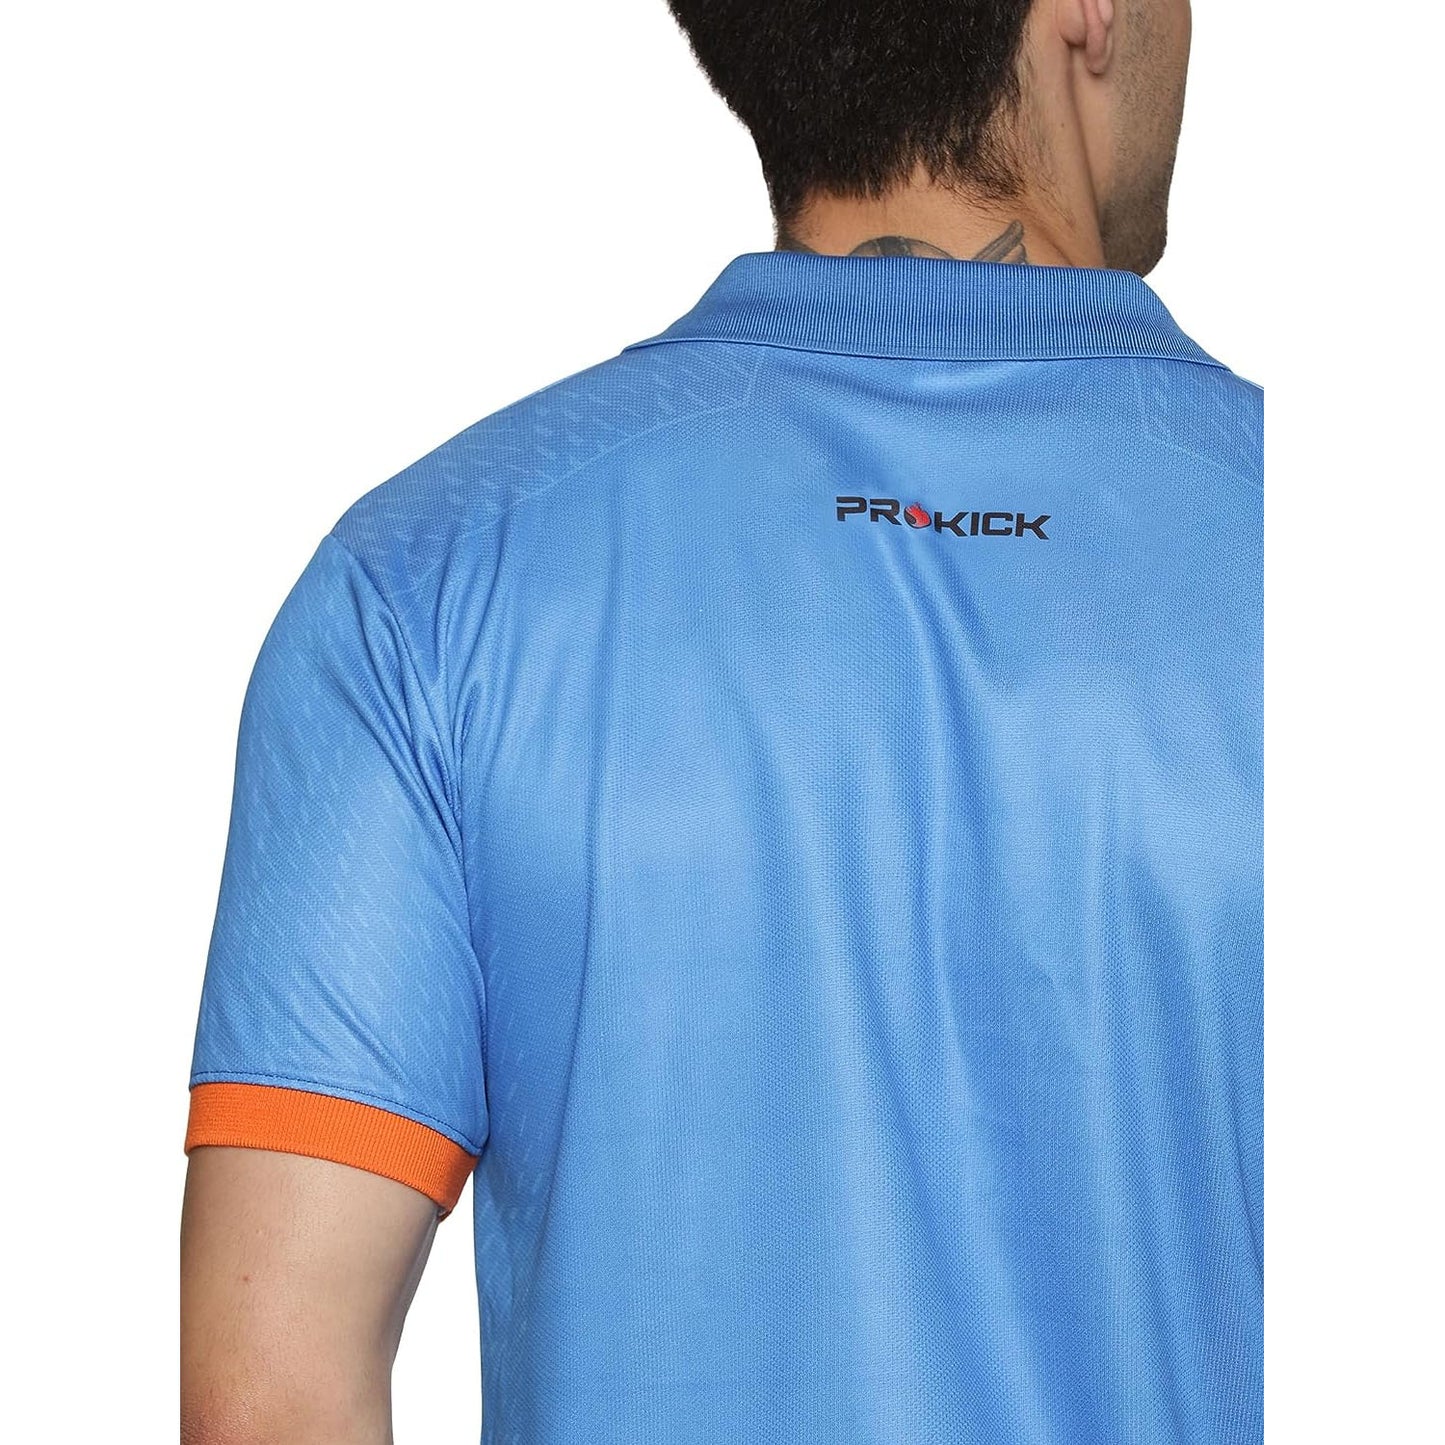 Prokick Indian Cricket Fan Jersey Polo Neck T-Shirt - Best Price online Prokicksports.com